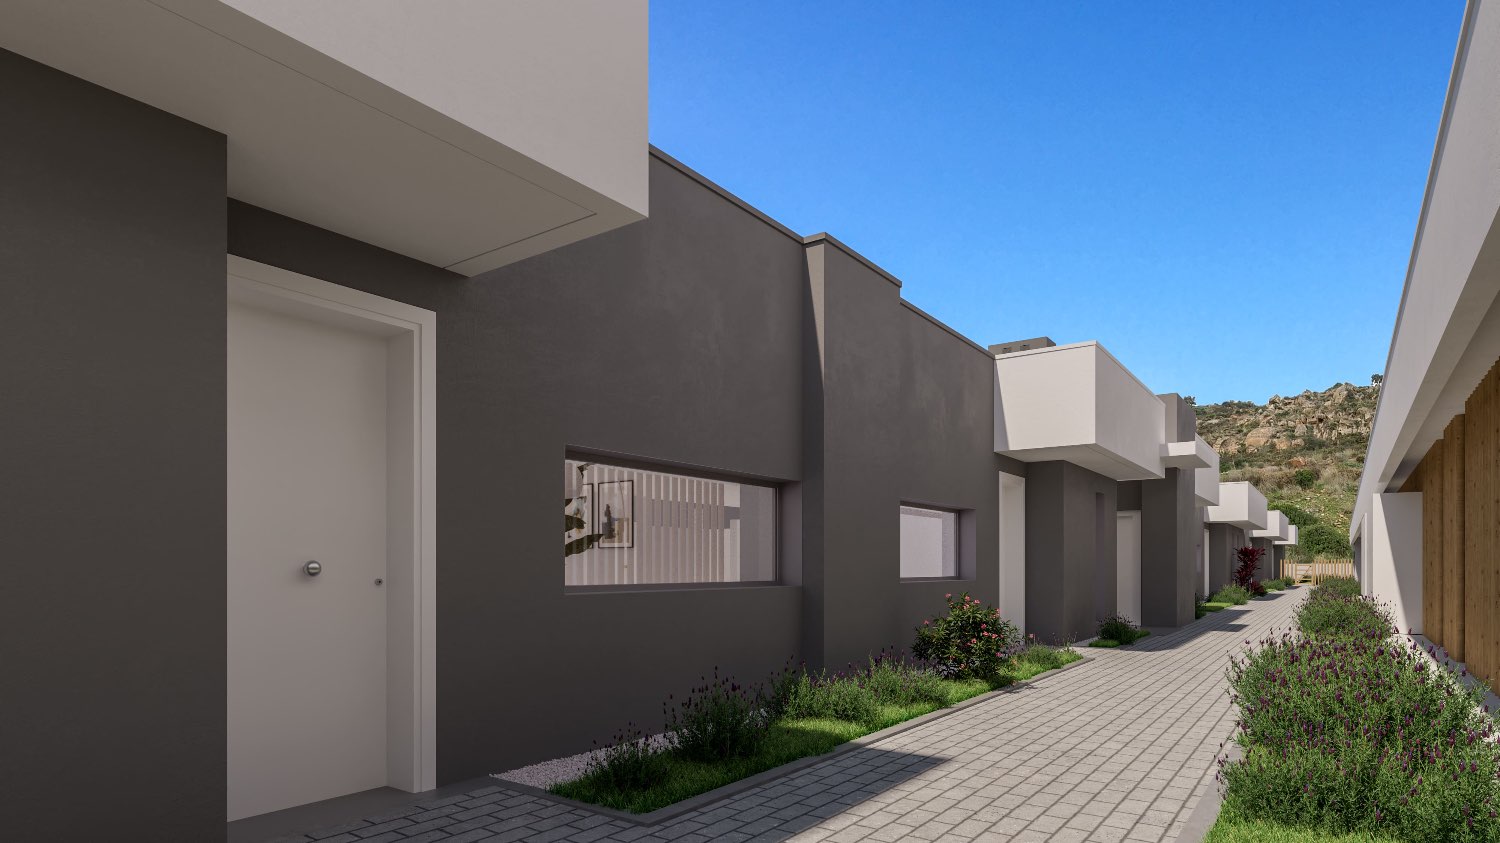 Exclusive Duplex Apartment with Sea View Garden - Costa del Sol